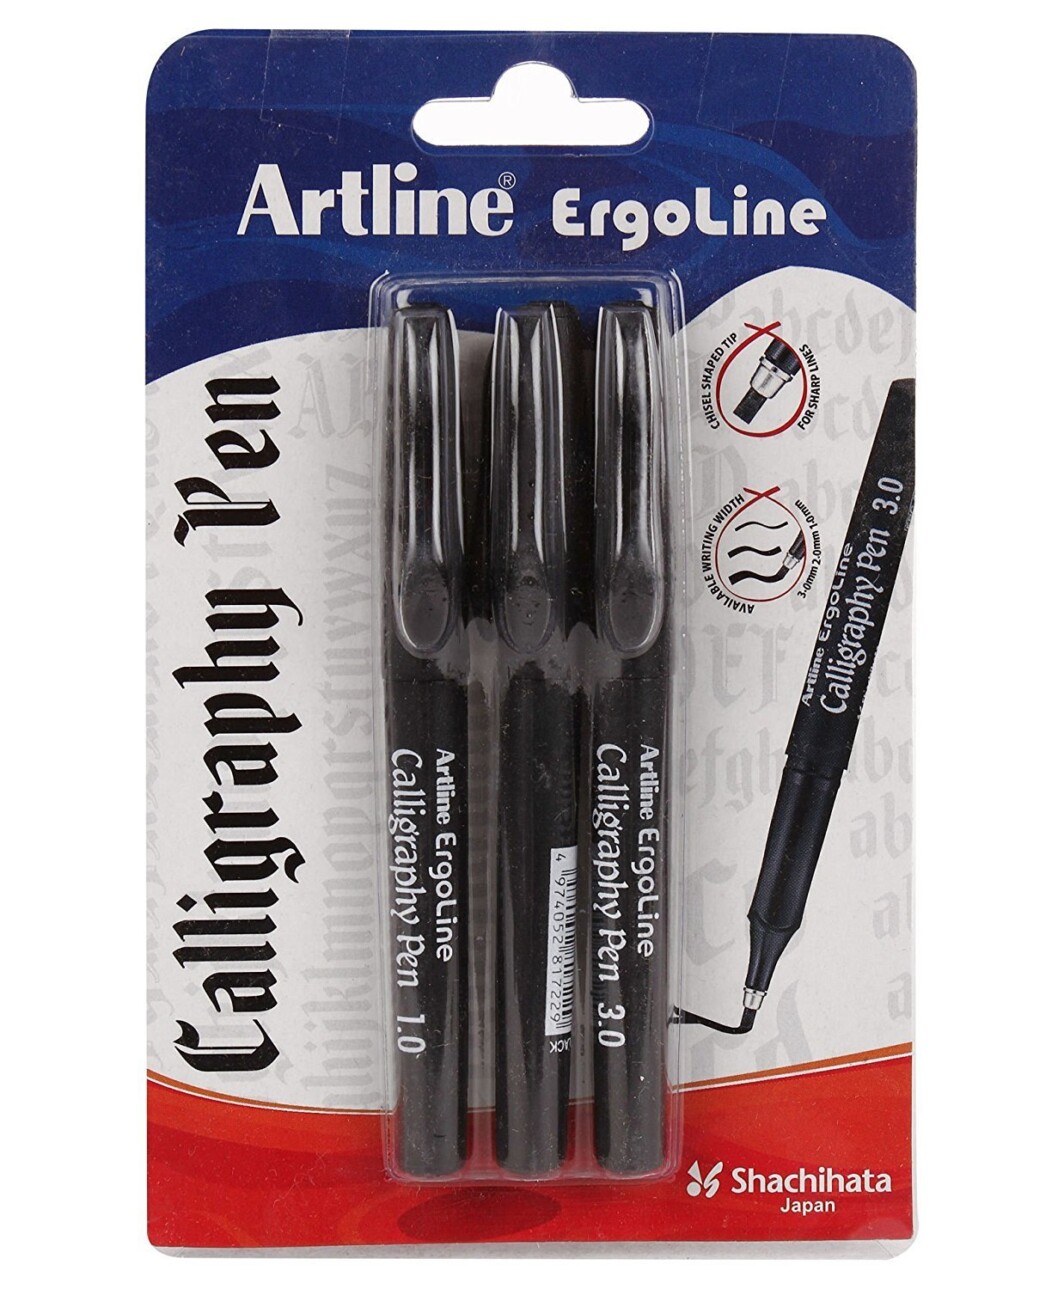 Artline Ergoline Calligraphy Pen Set with 3 Nib Sizes - Pack of 3 (Black)-0